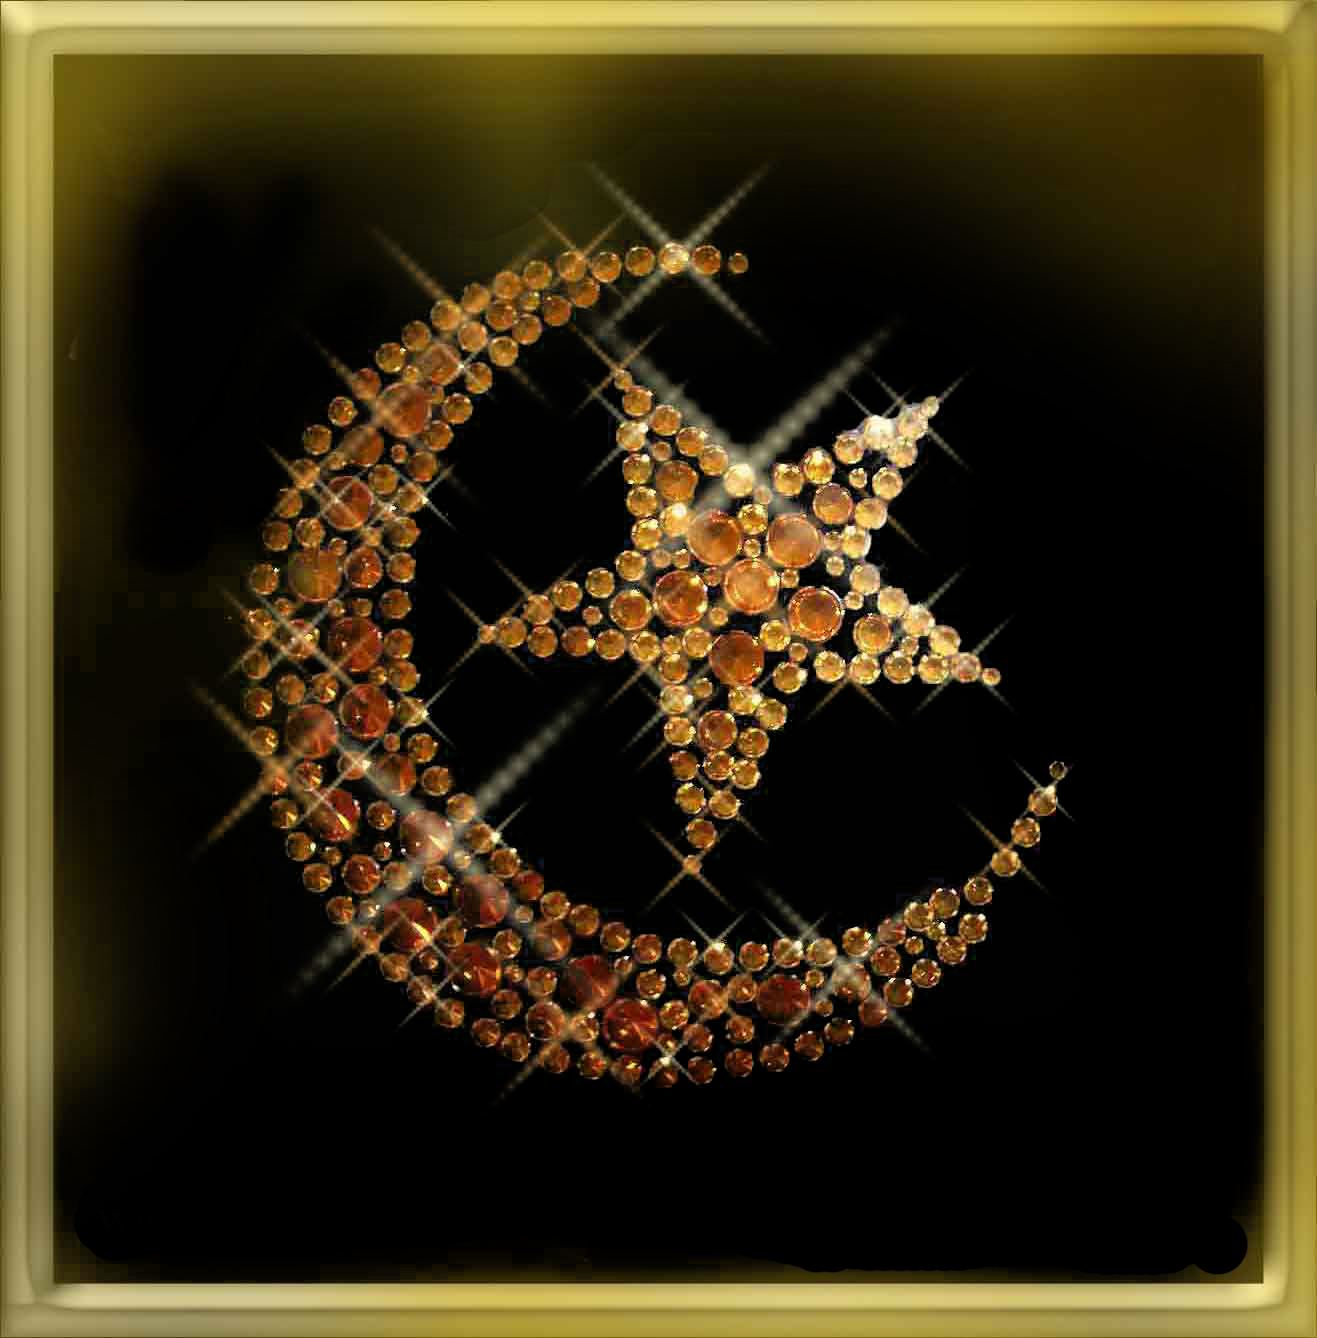 Мусульманский символ полумесяц и звезда фото